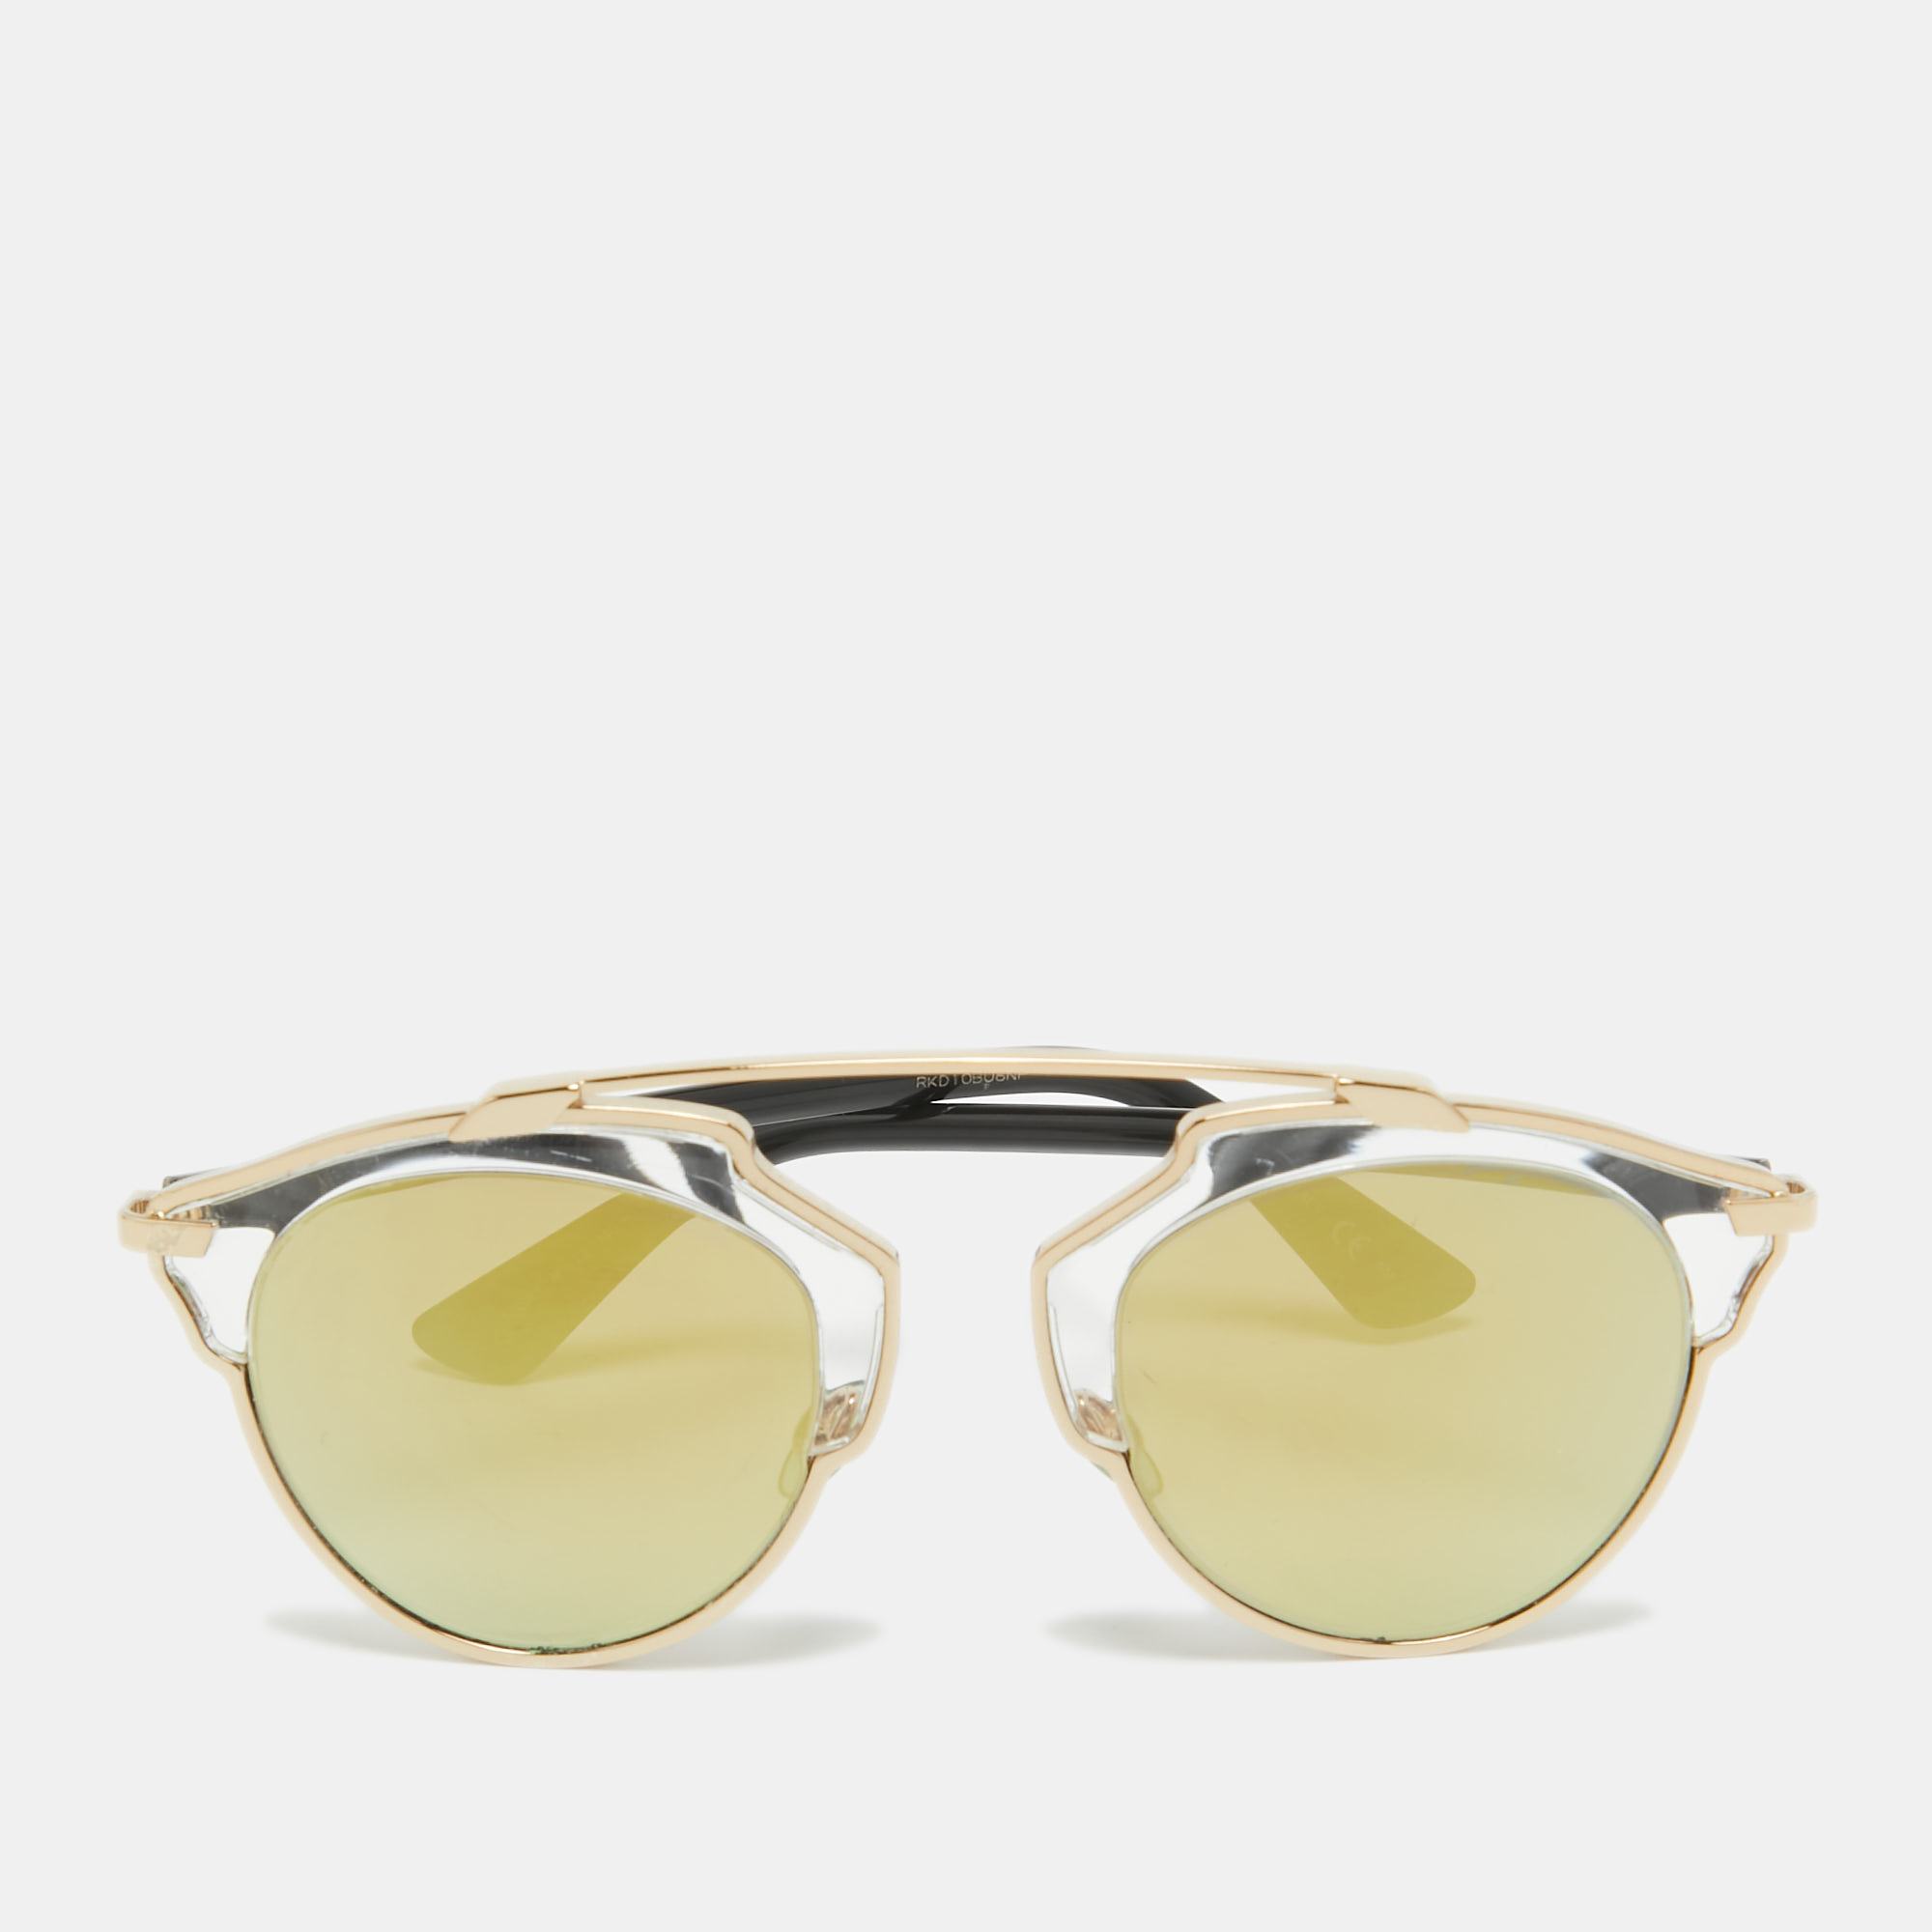 Dior gold/black  mirrored soreal aviator sunglasses